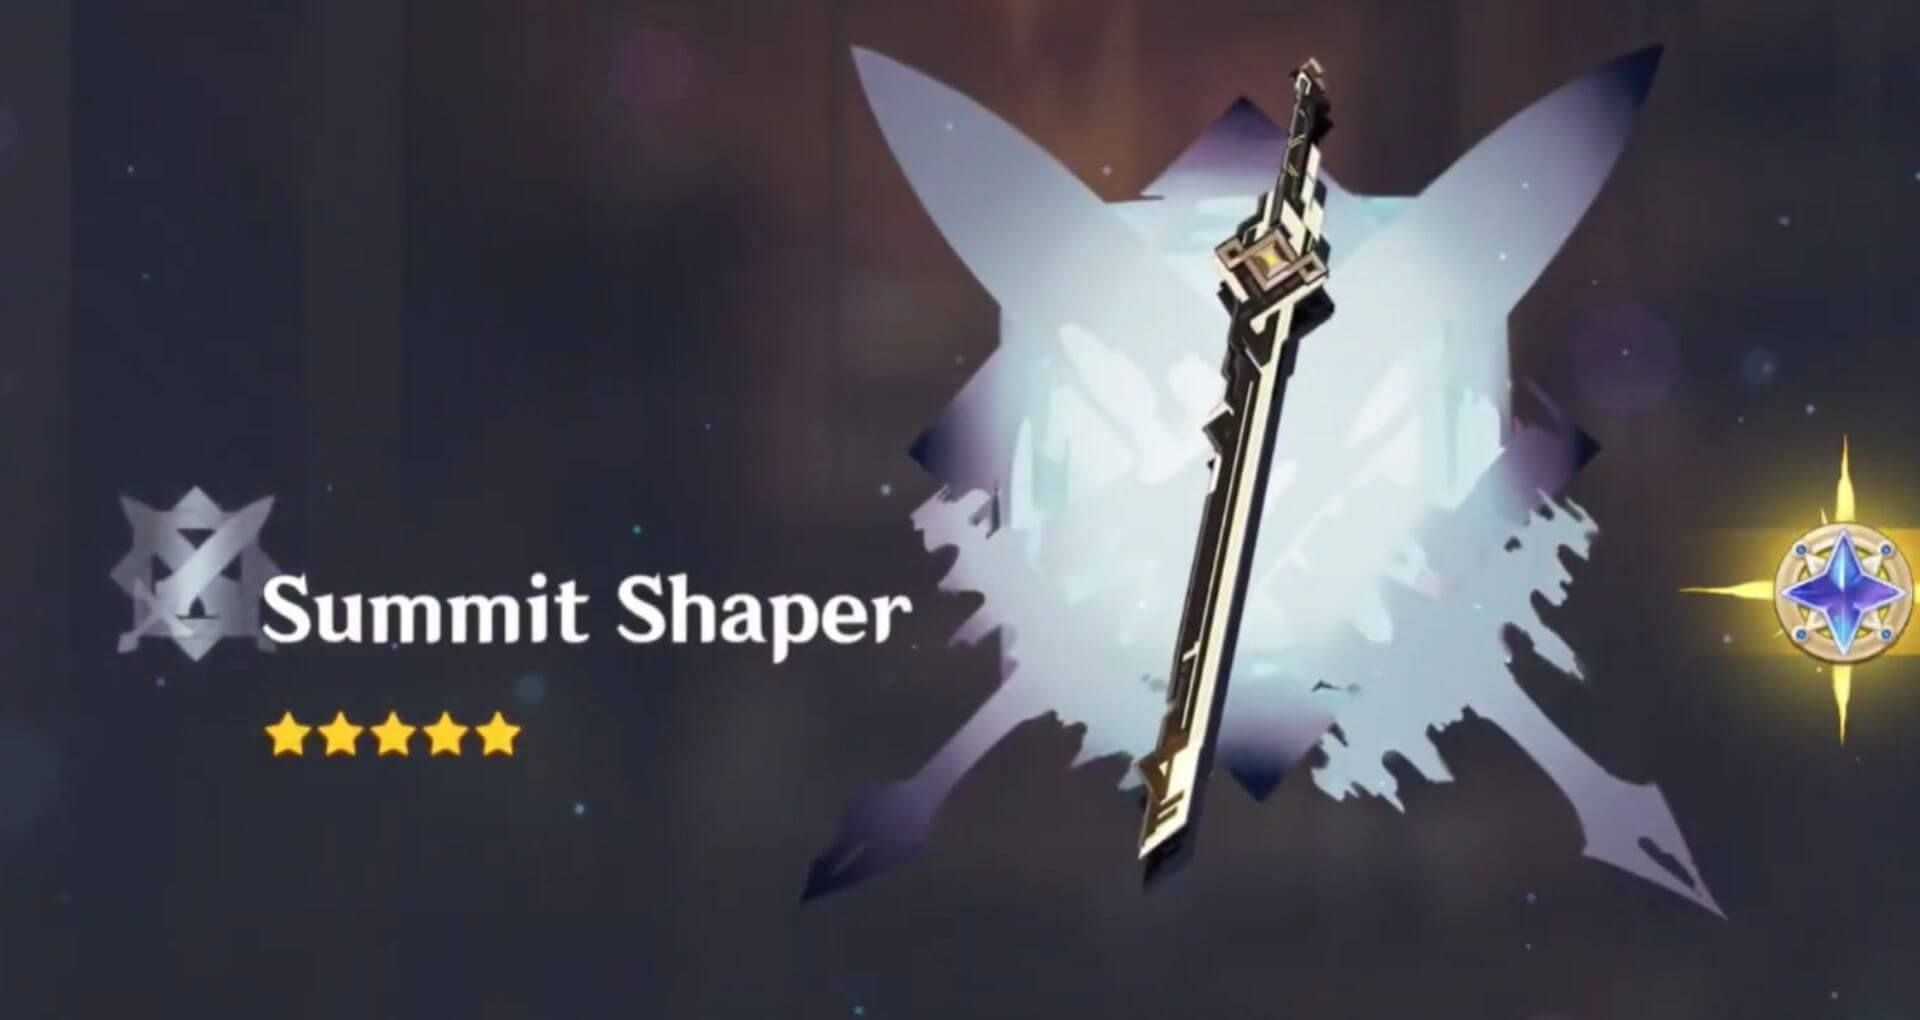 Summit Shaper sword (Image via Genshin Impact)